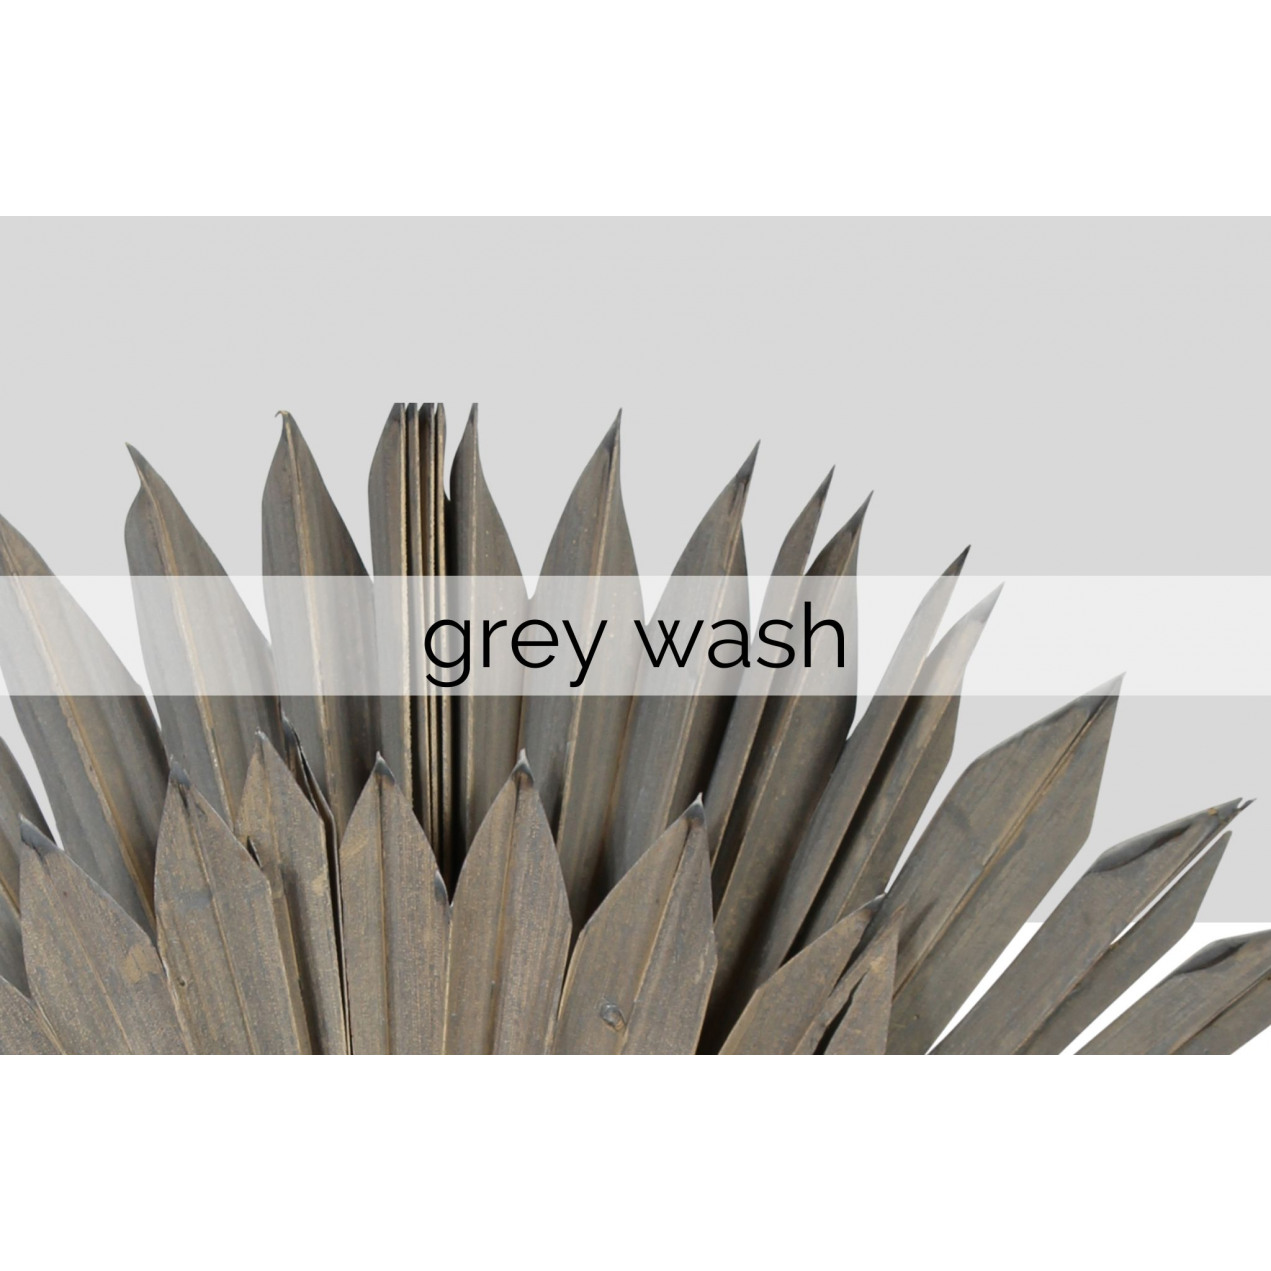 NEW! Grey wash items